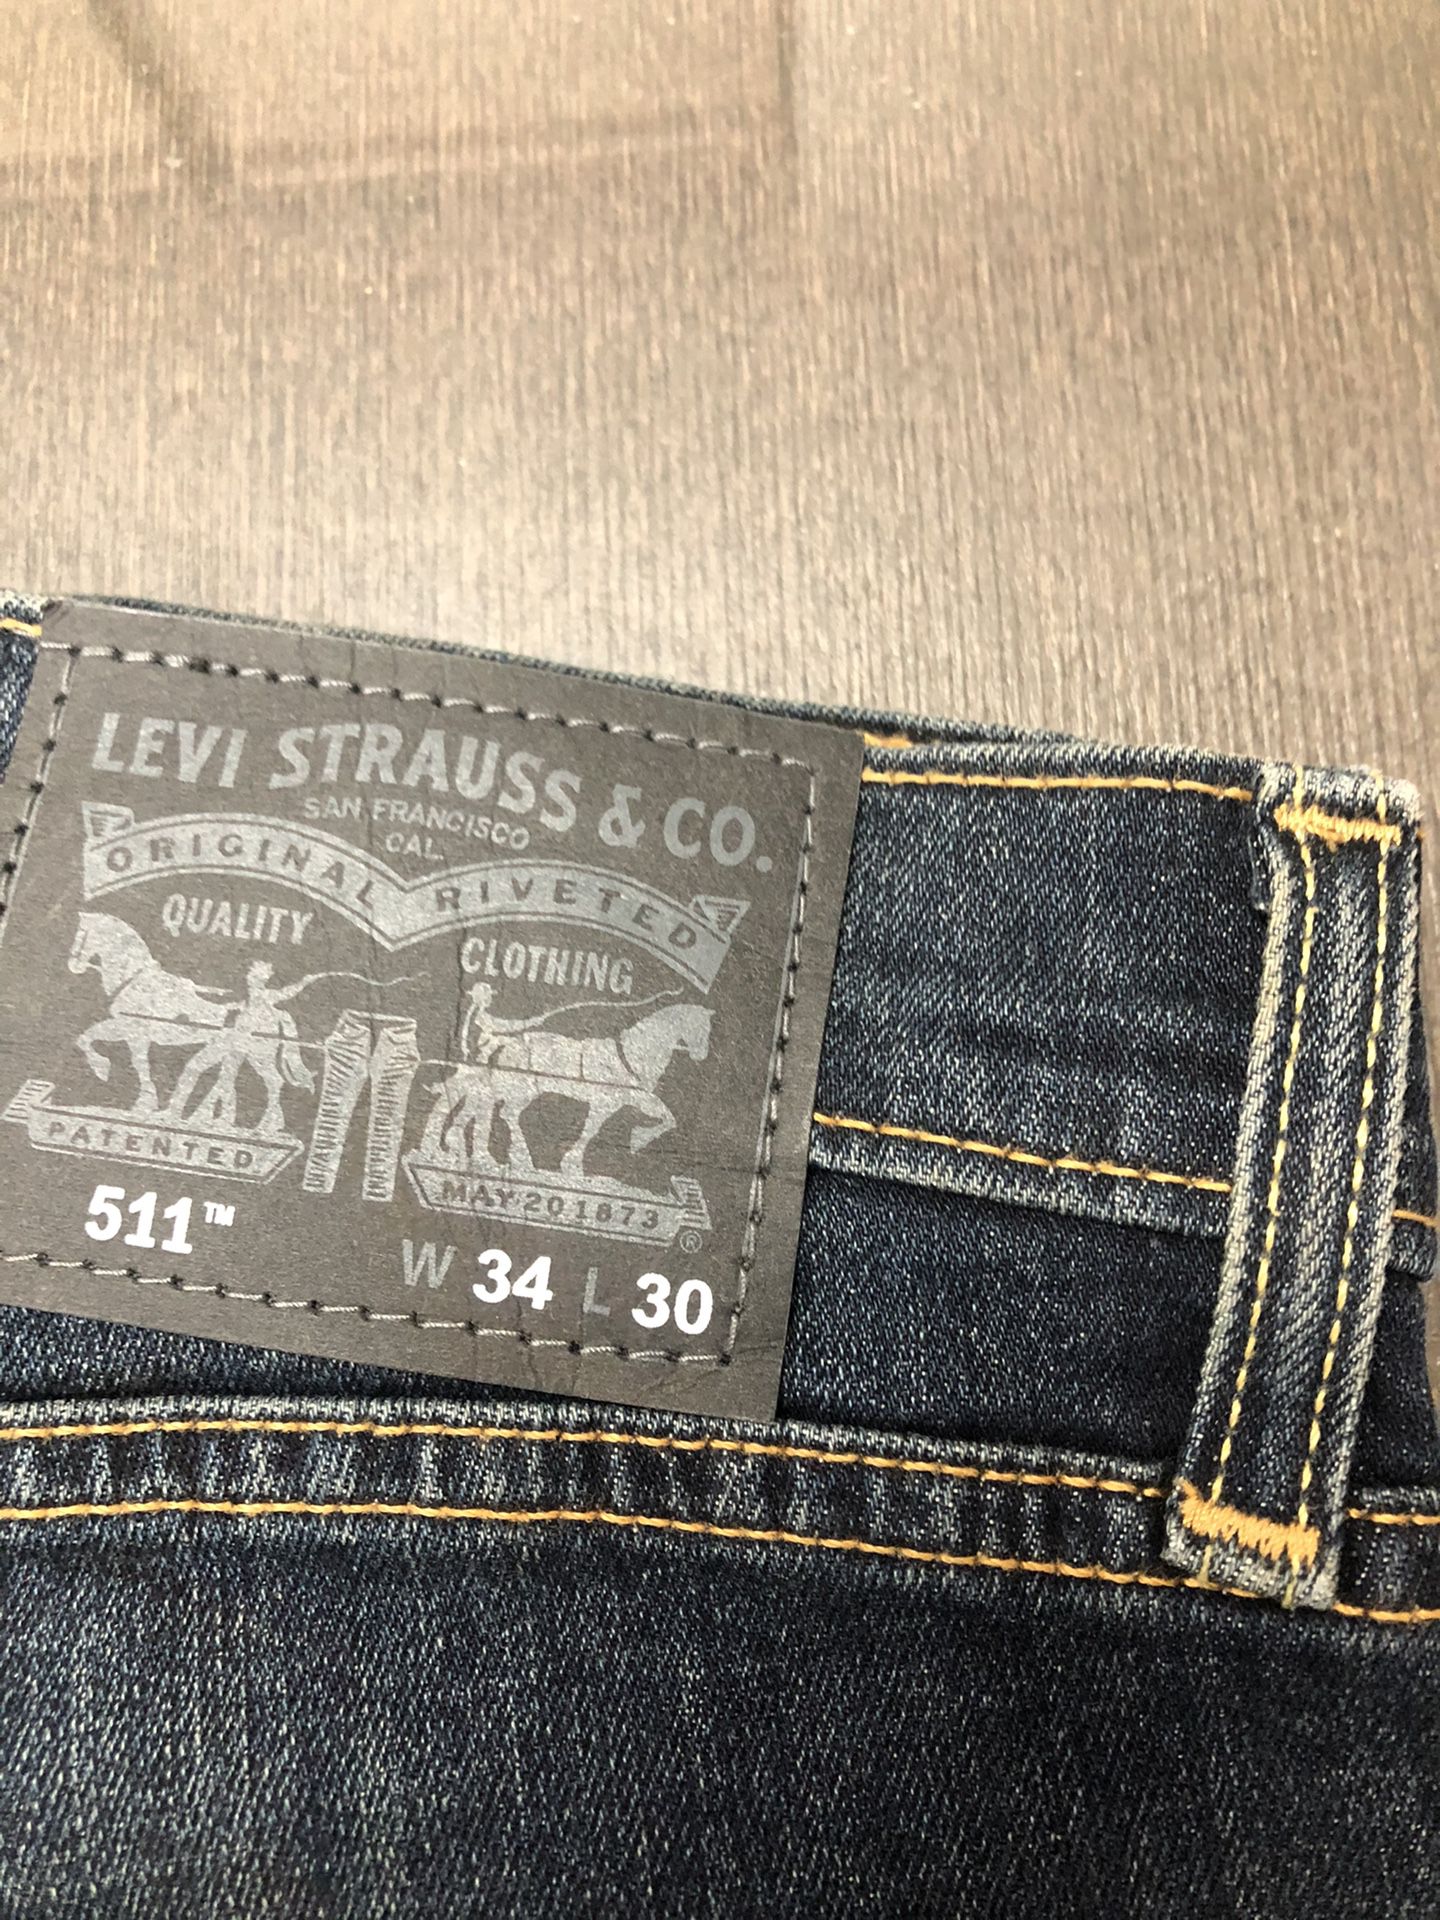 Levi’s jeans for men